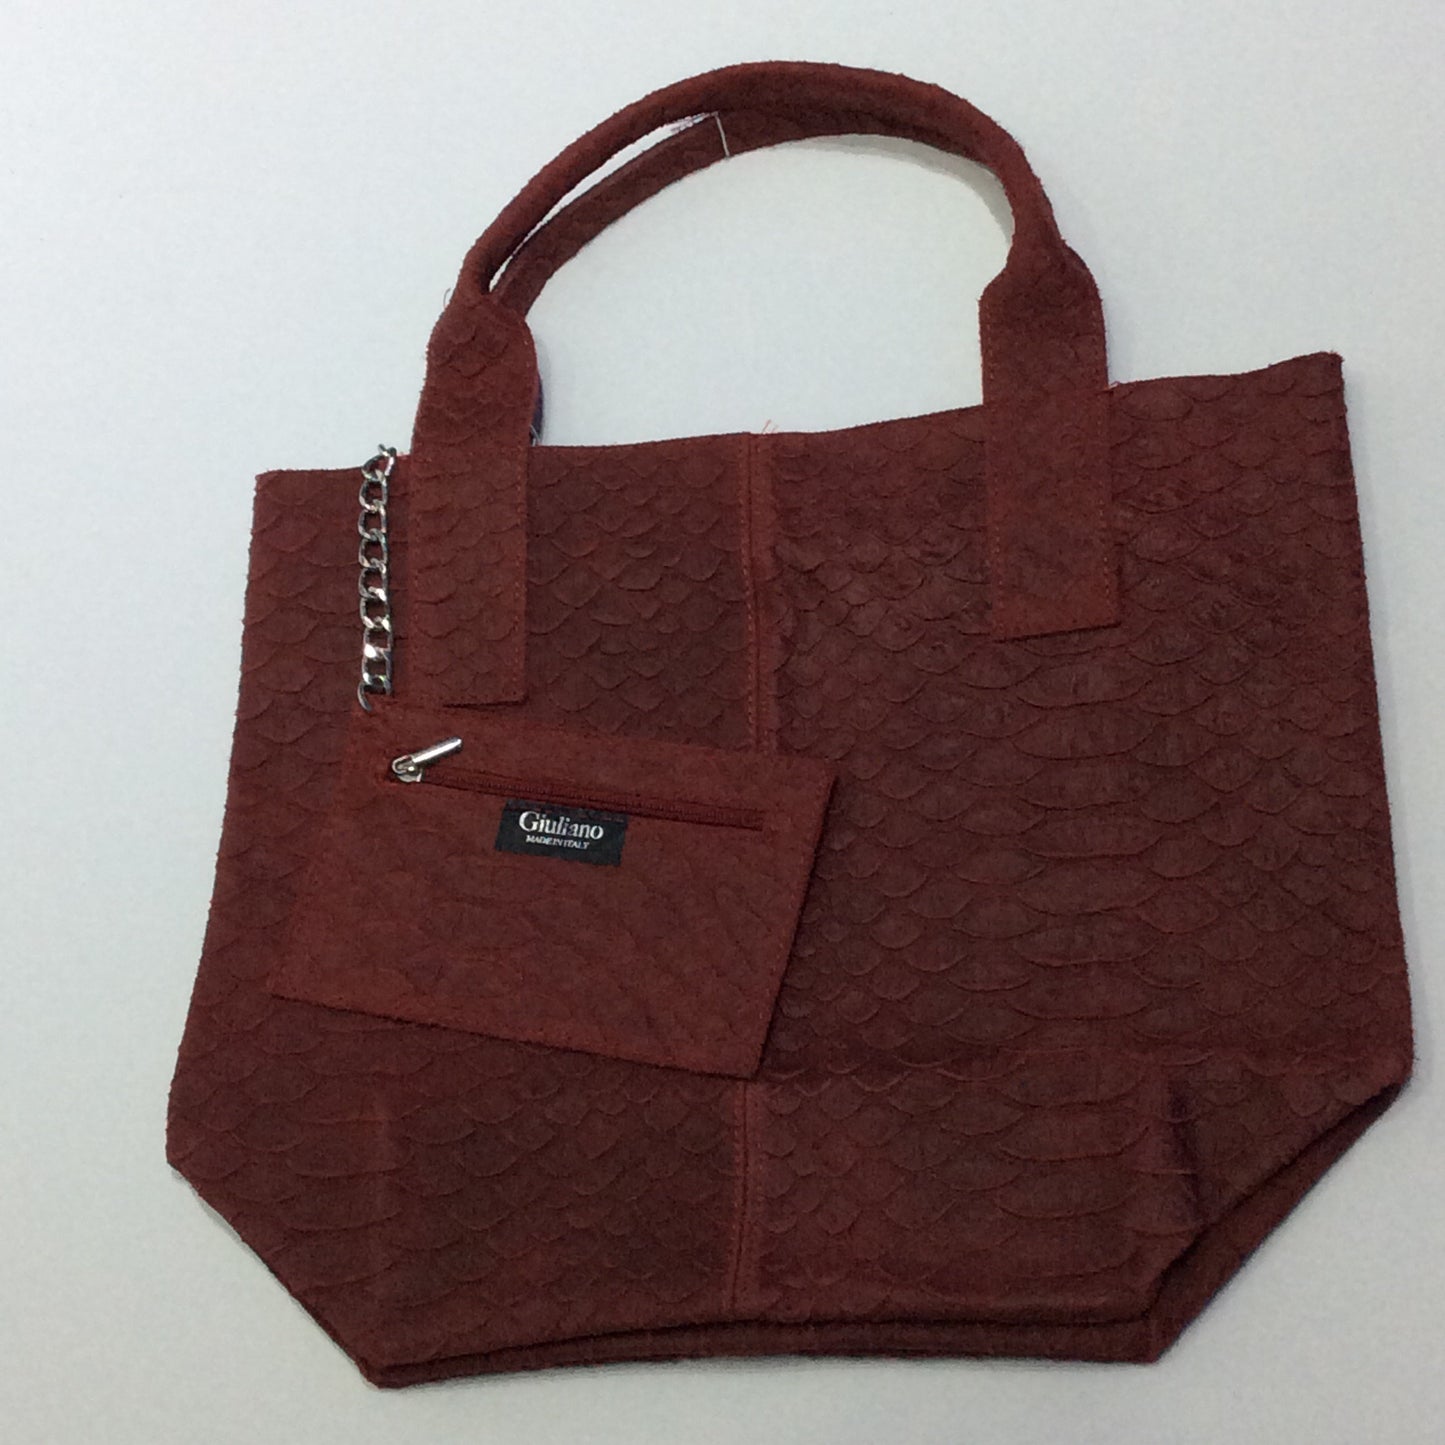 Italian leather sack purse with change purse in faux crocodile